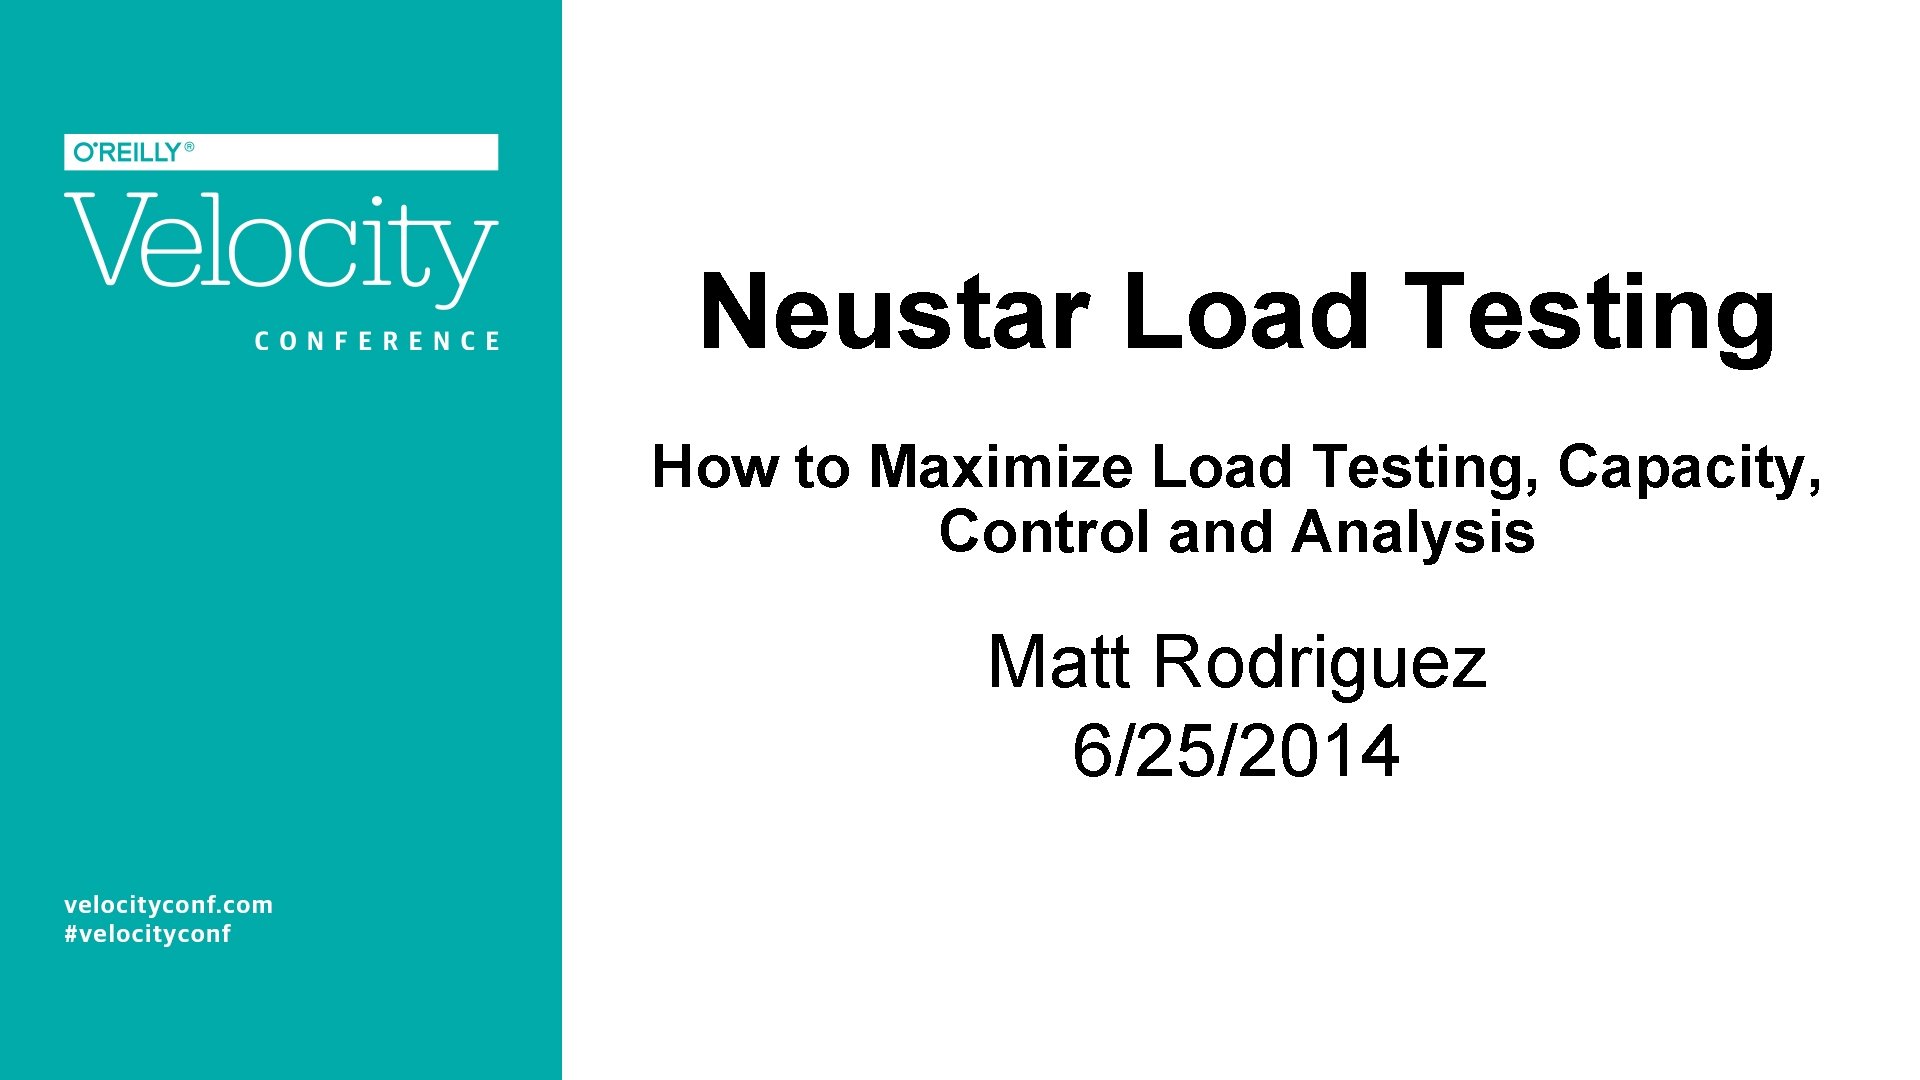 Neustar Load Testing How to Maximize Load Testing, Capacity, Control and Analysis Matt Rodriguez